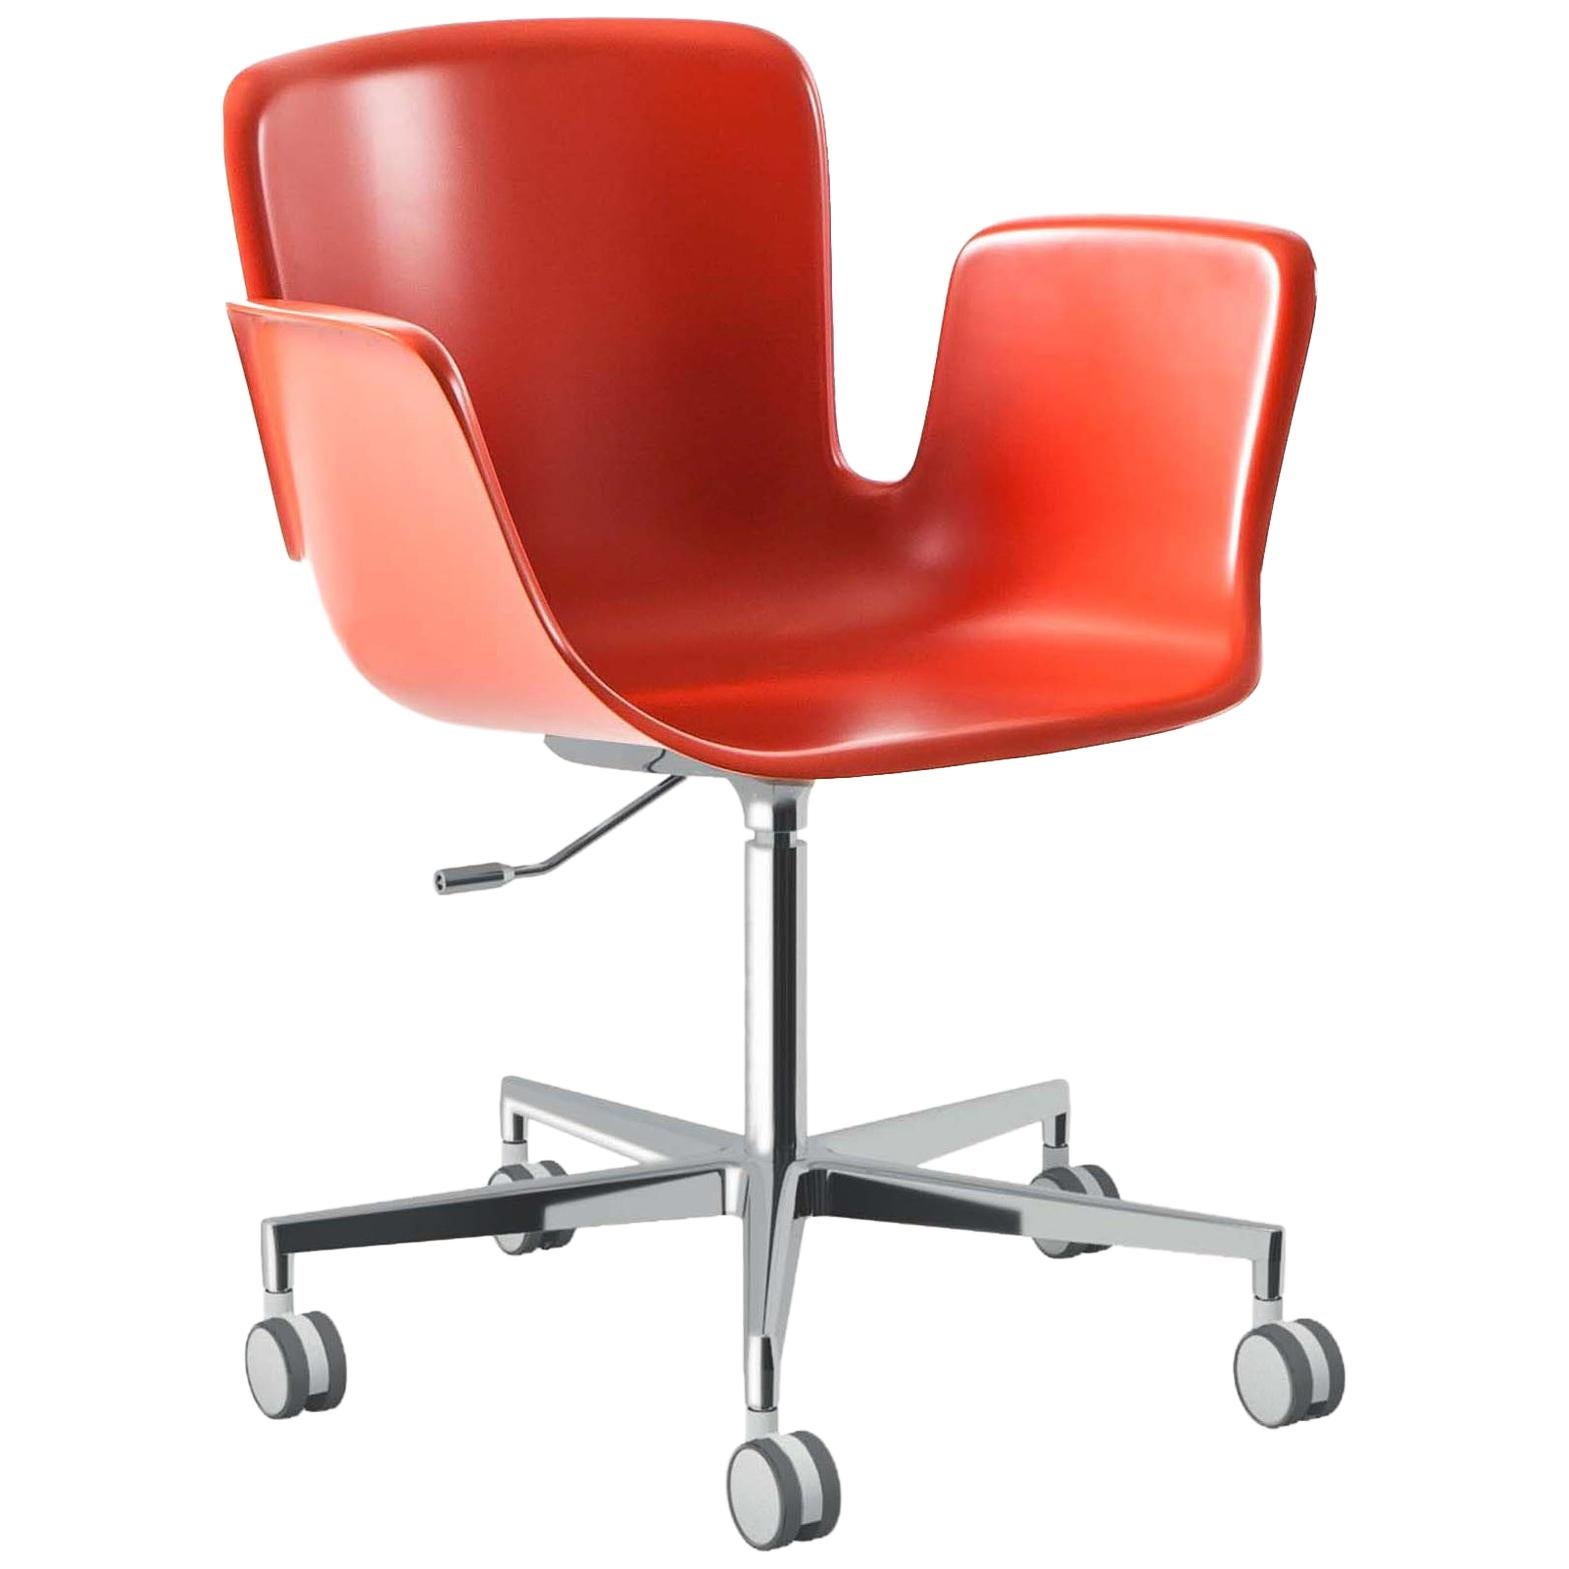 Werner Aisslinger Juli Plastic Chair in Polished Aluminum for Cappellini